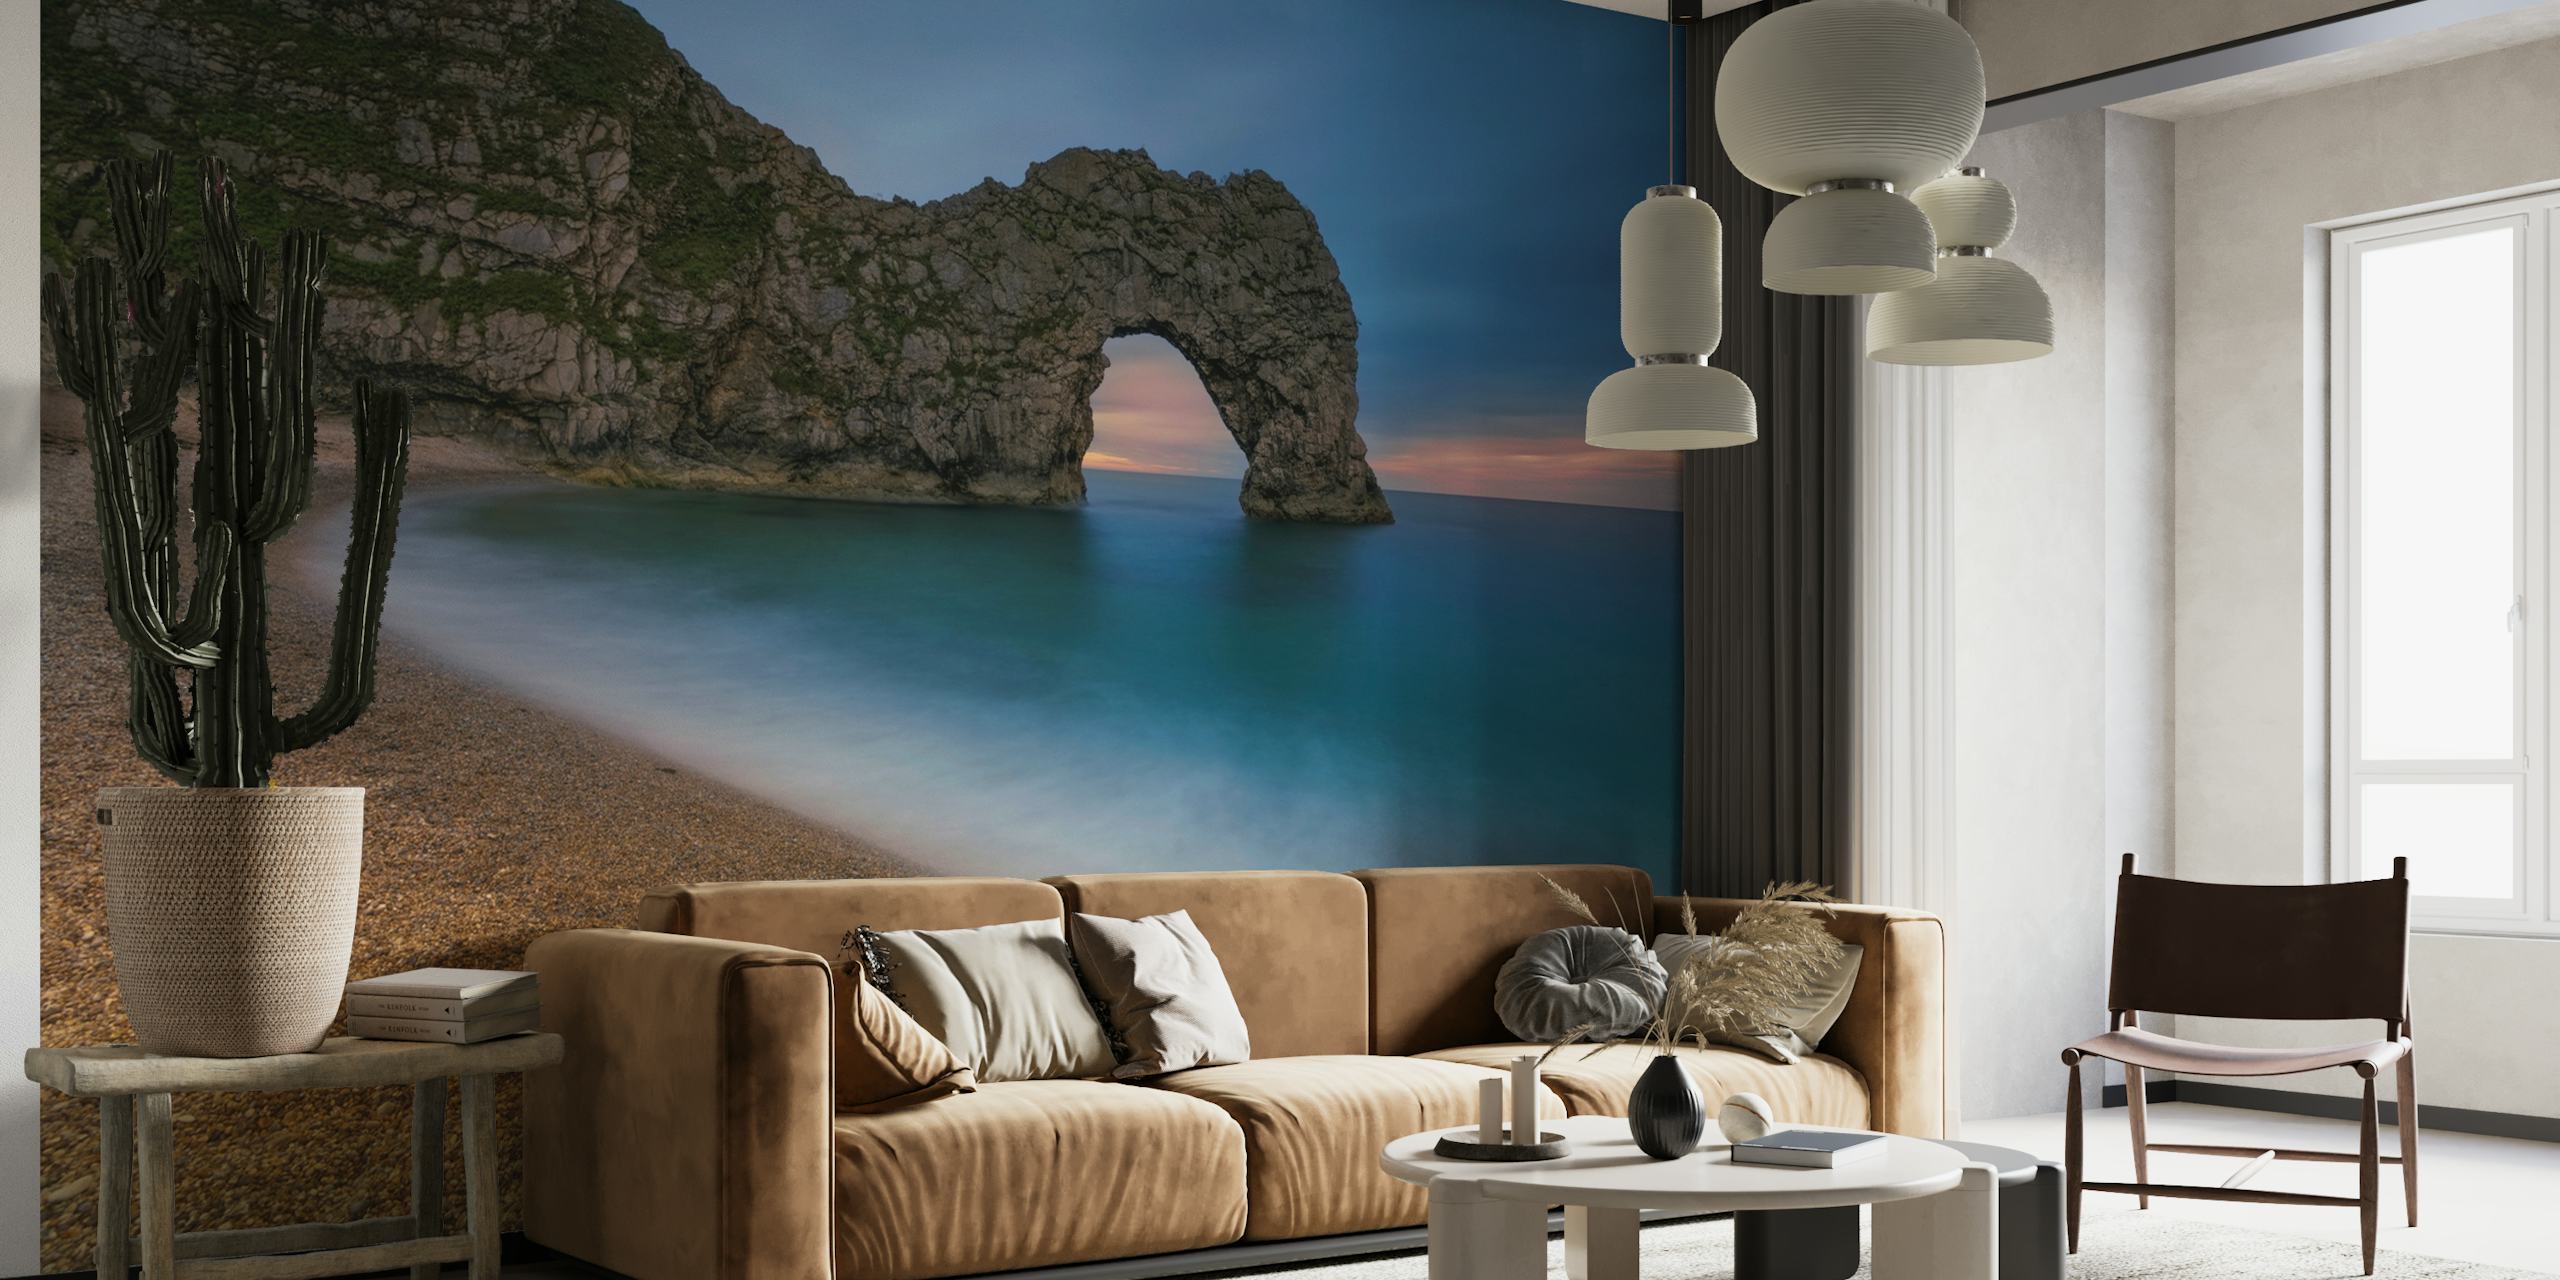 Dorset behang